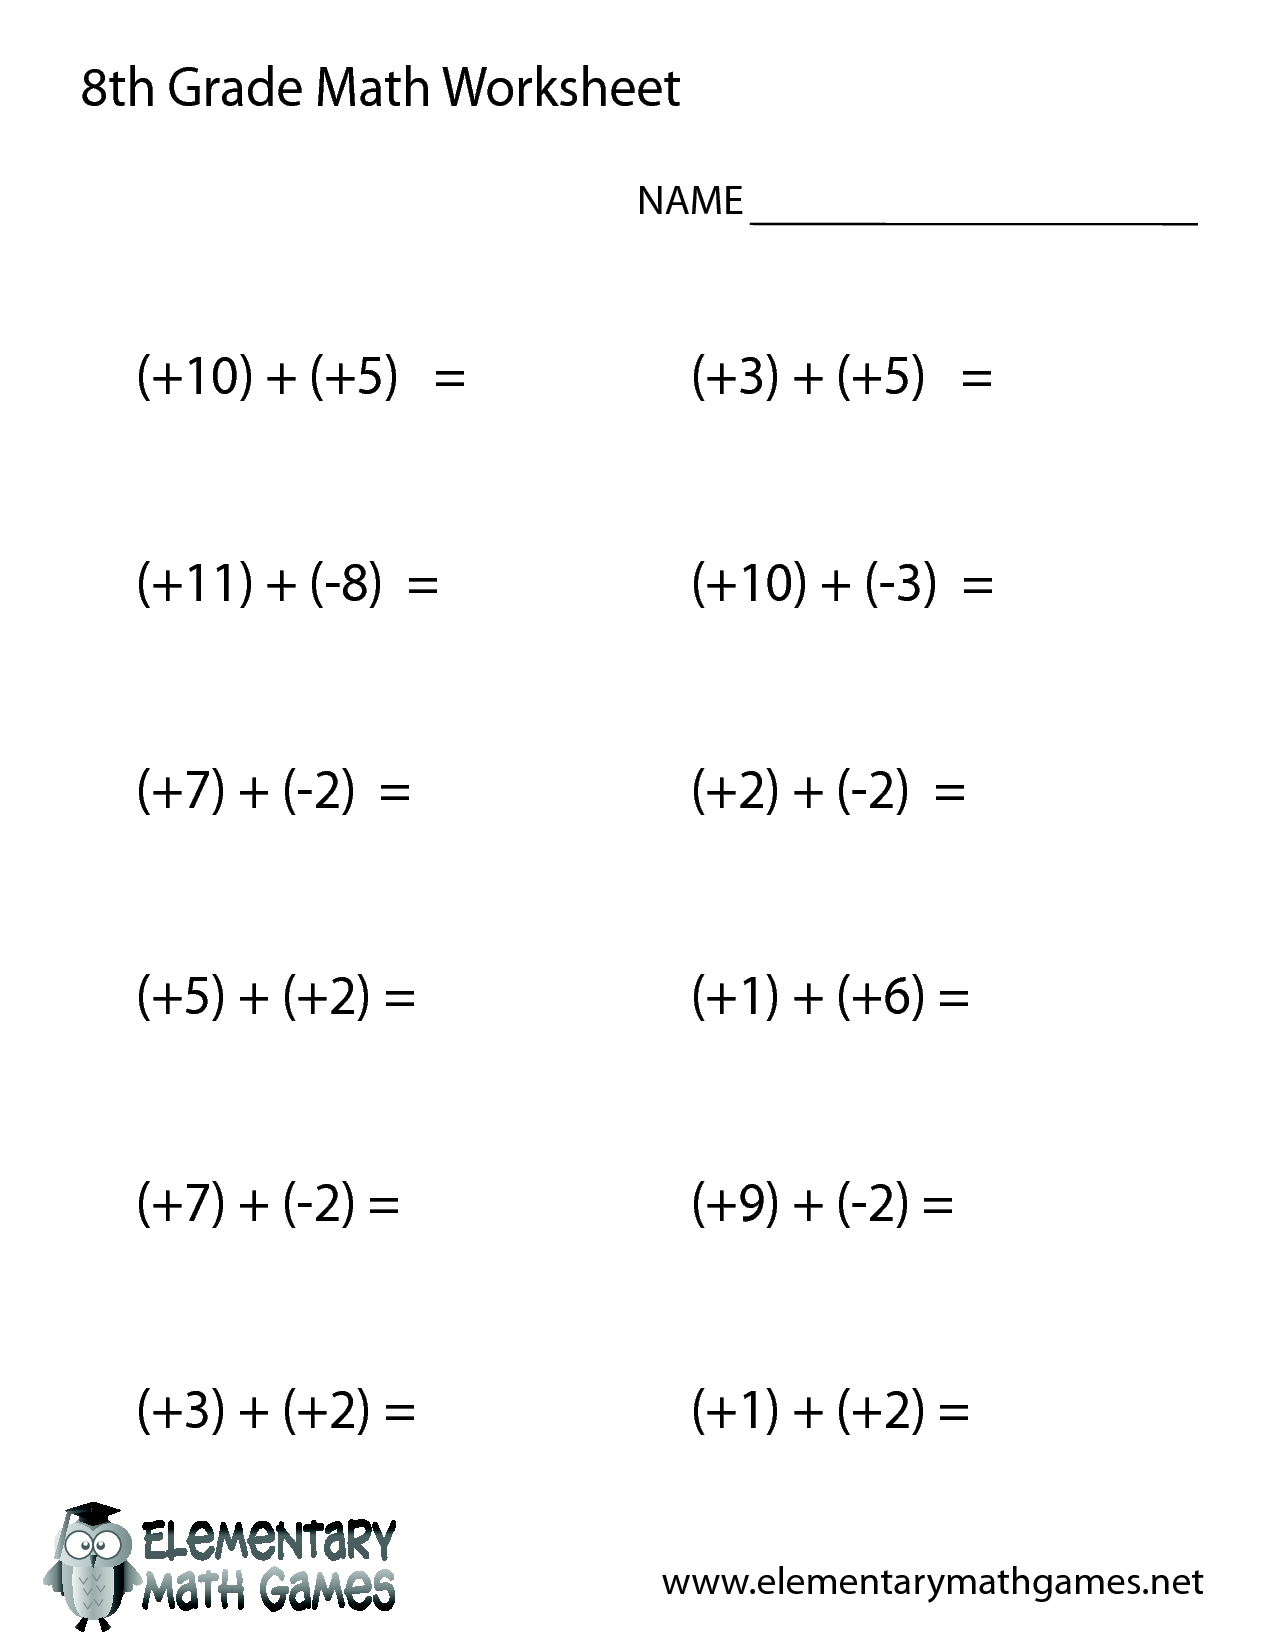 Homework help for 8th grade math